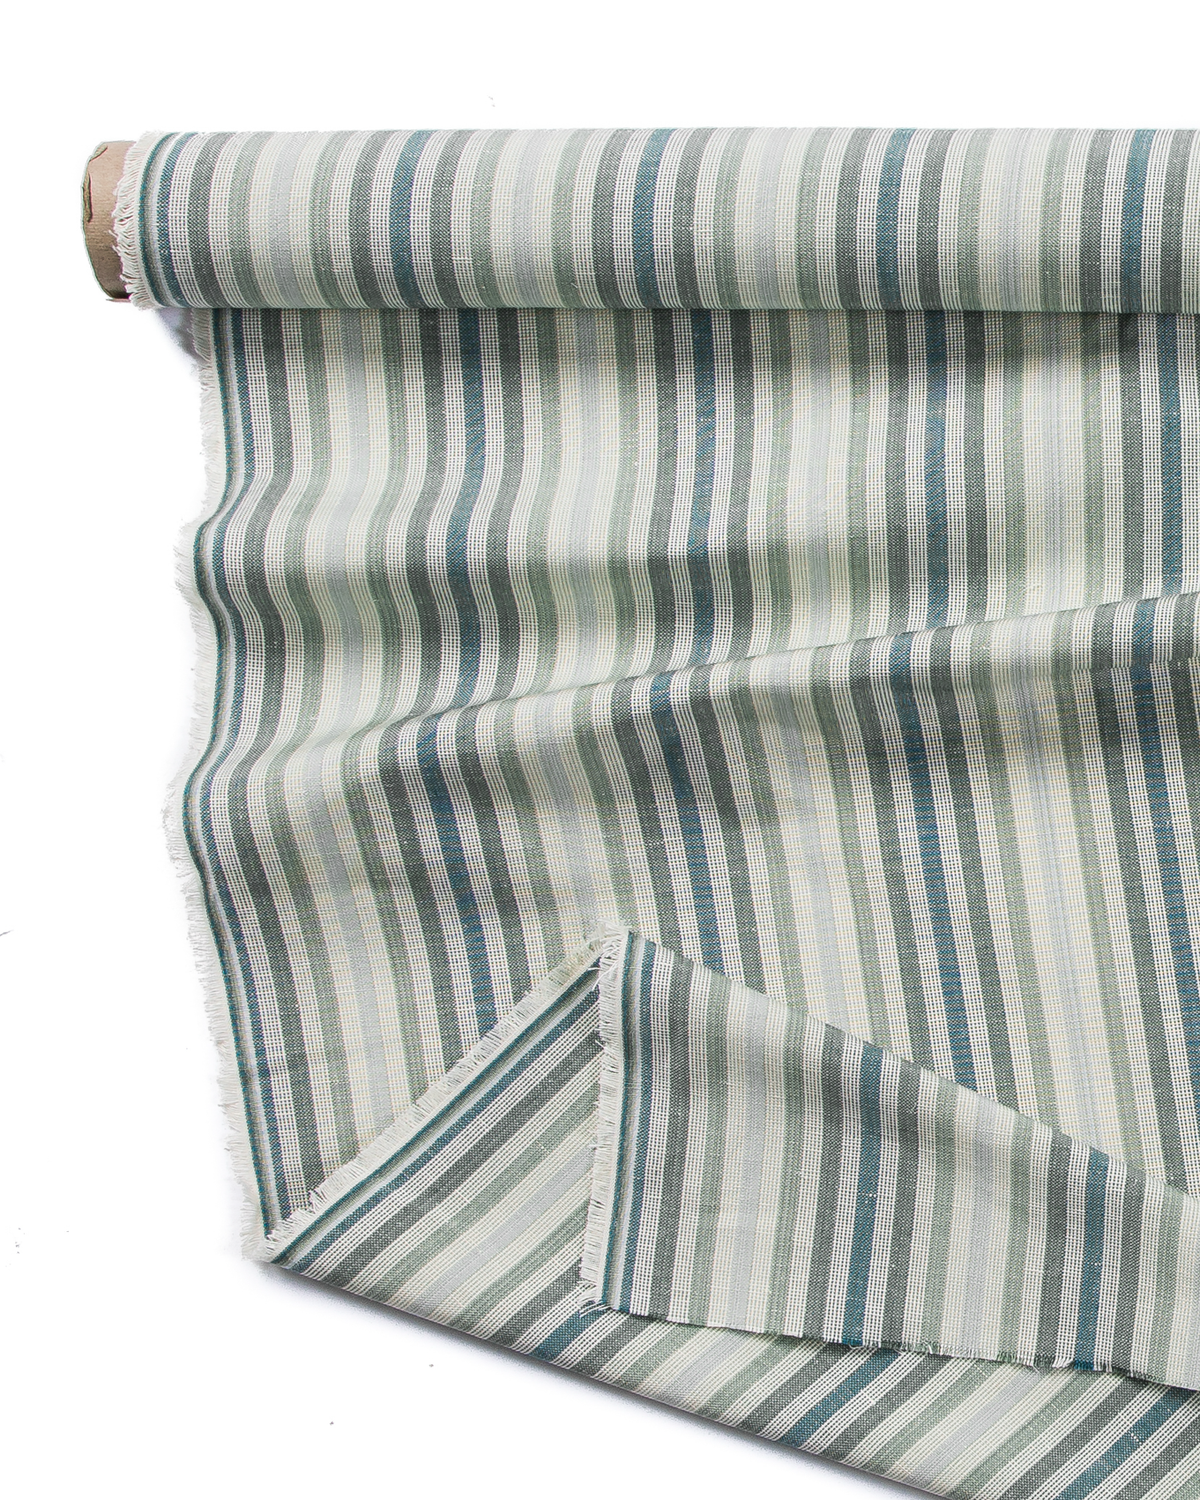 Ombré Stripe Fabric in Dennis Green